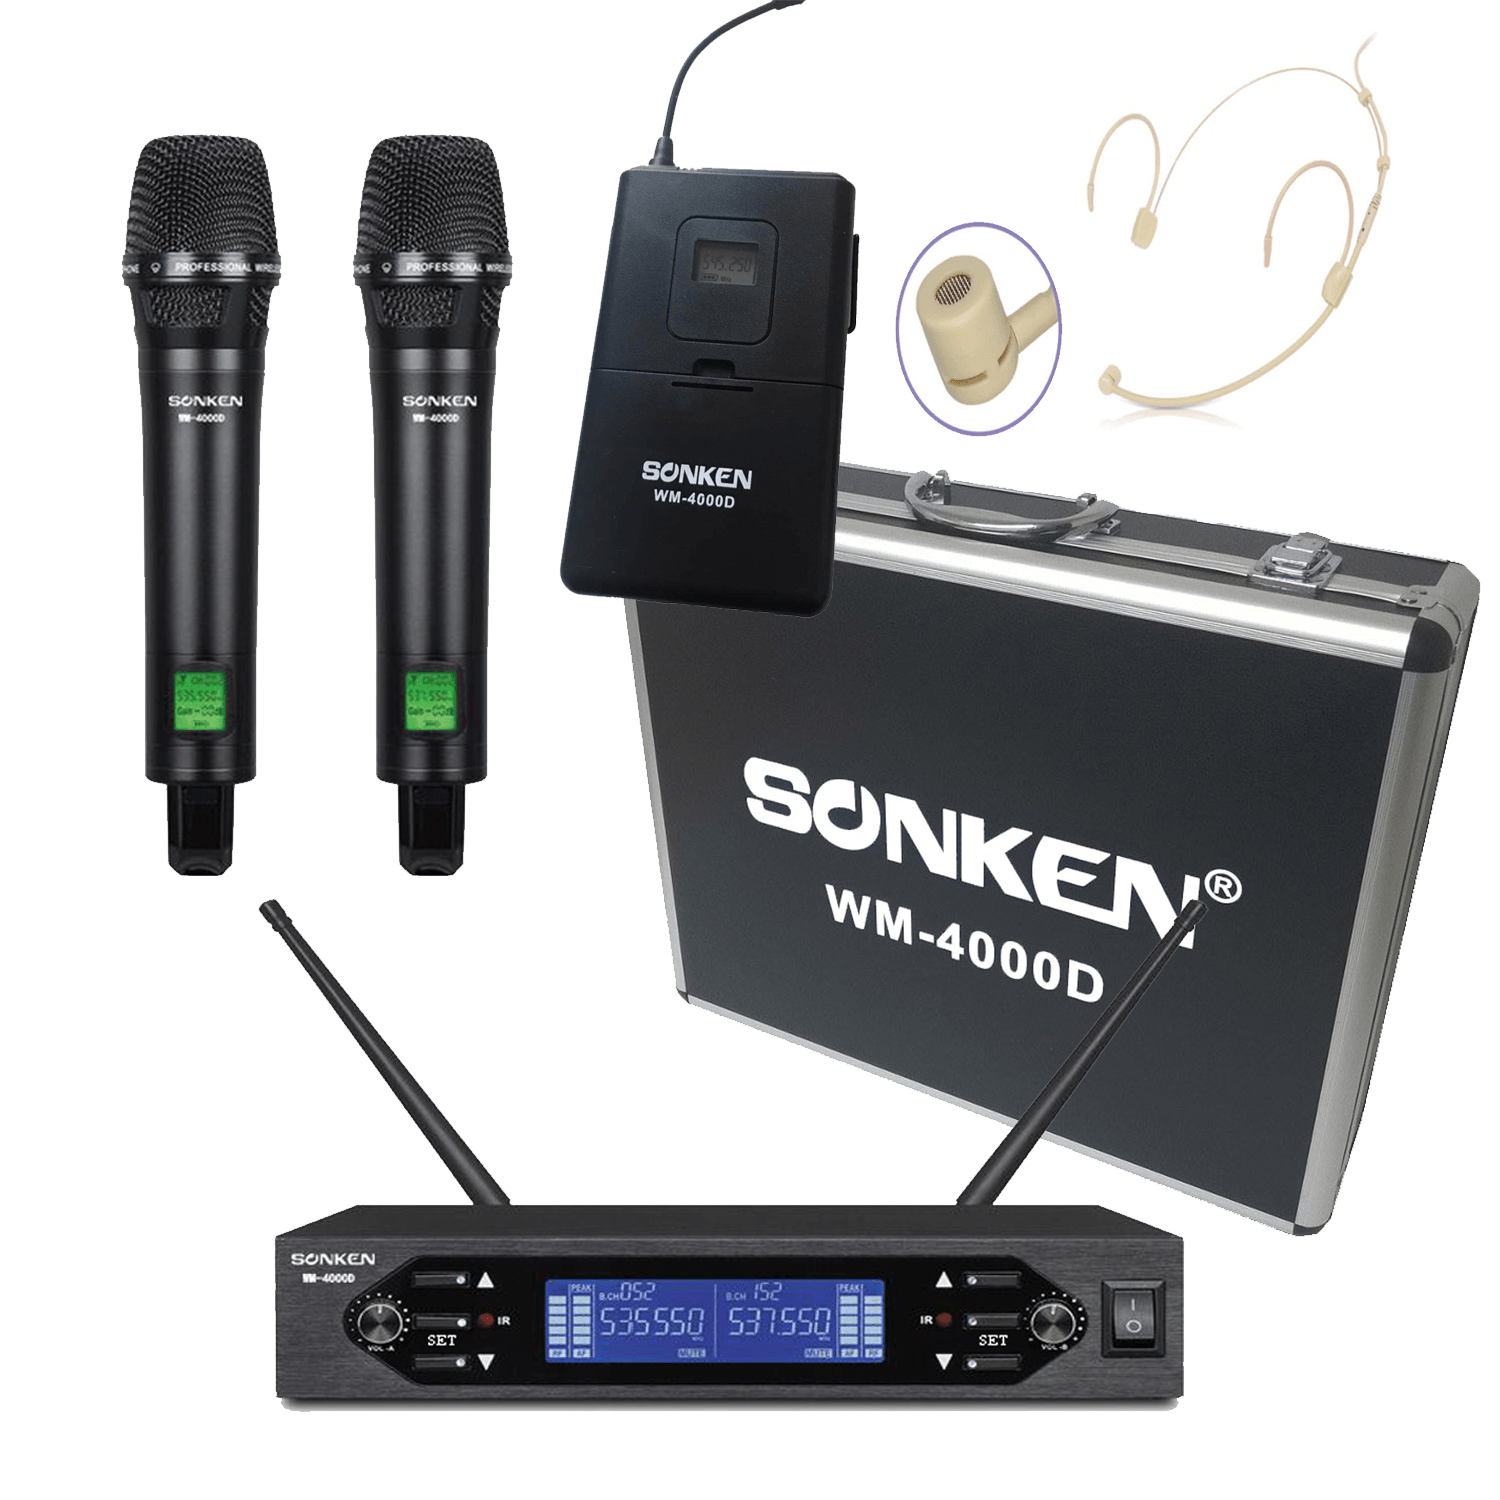 Sonken WM-4000D + Body Pack Headset - PRO 200 Channel UHF Wireless Microphones (2) + Body Pack & Headset Microphone + Case - Karaoke Home Entertainment